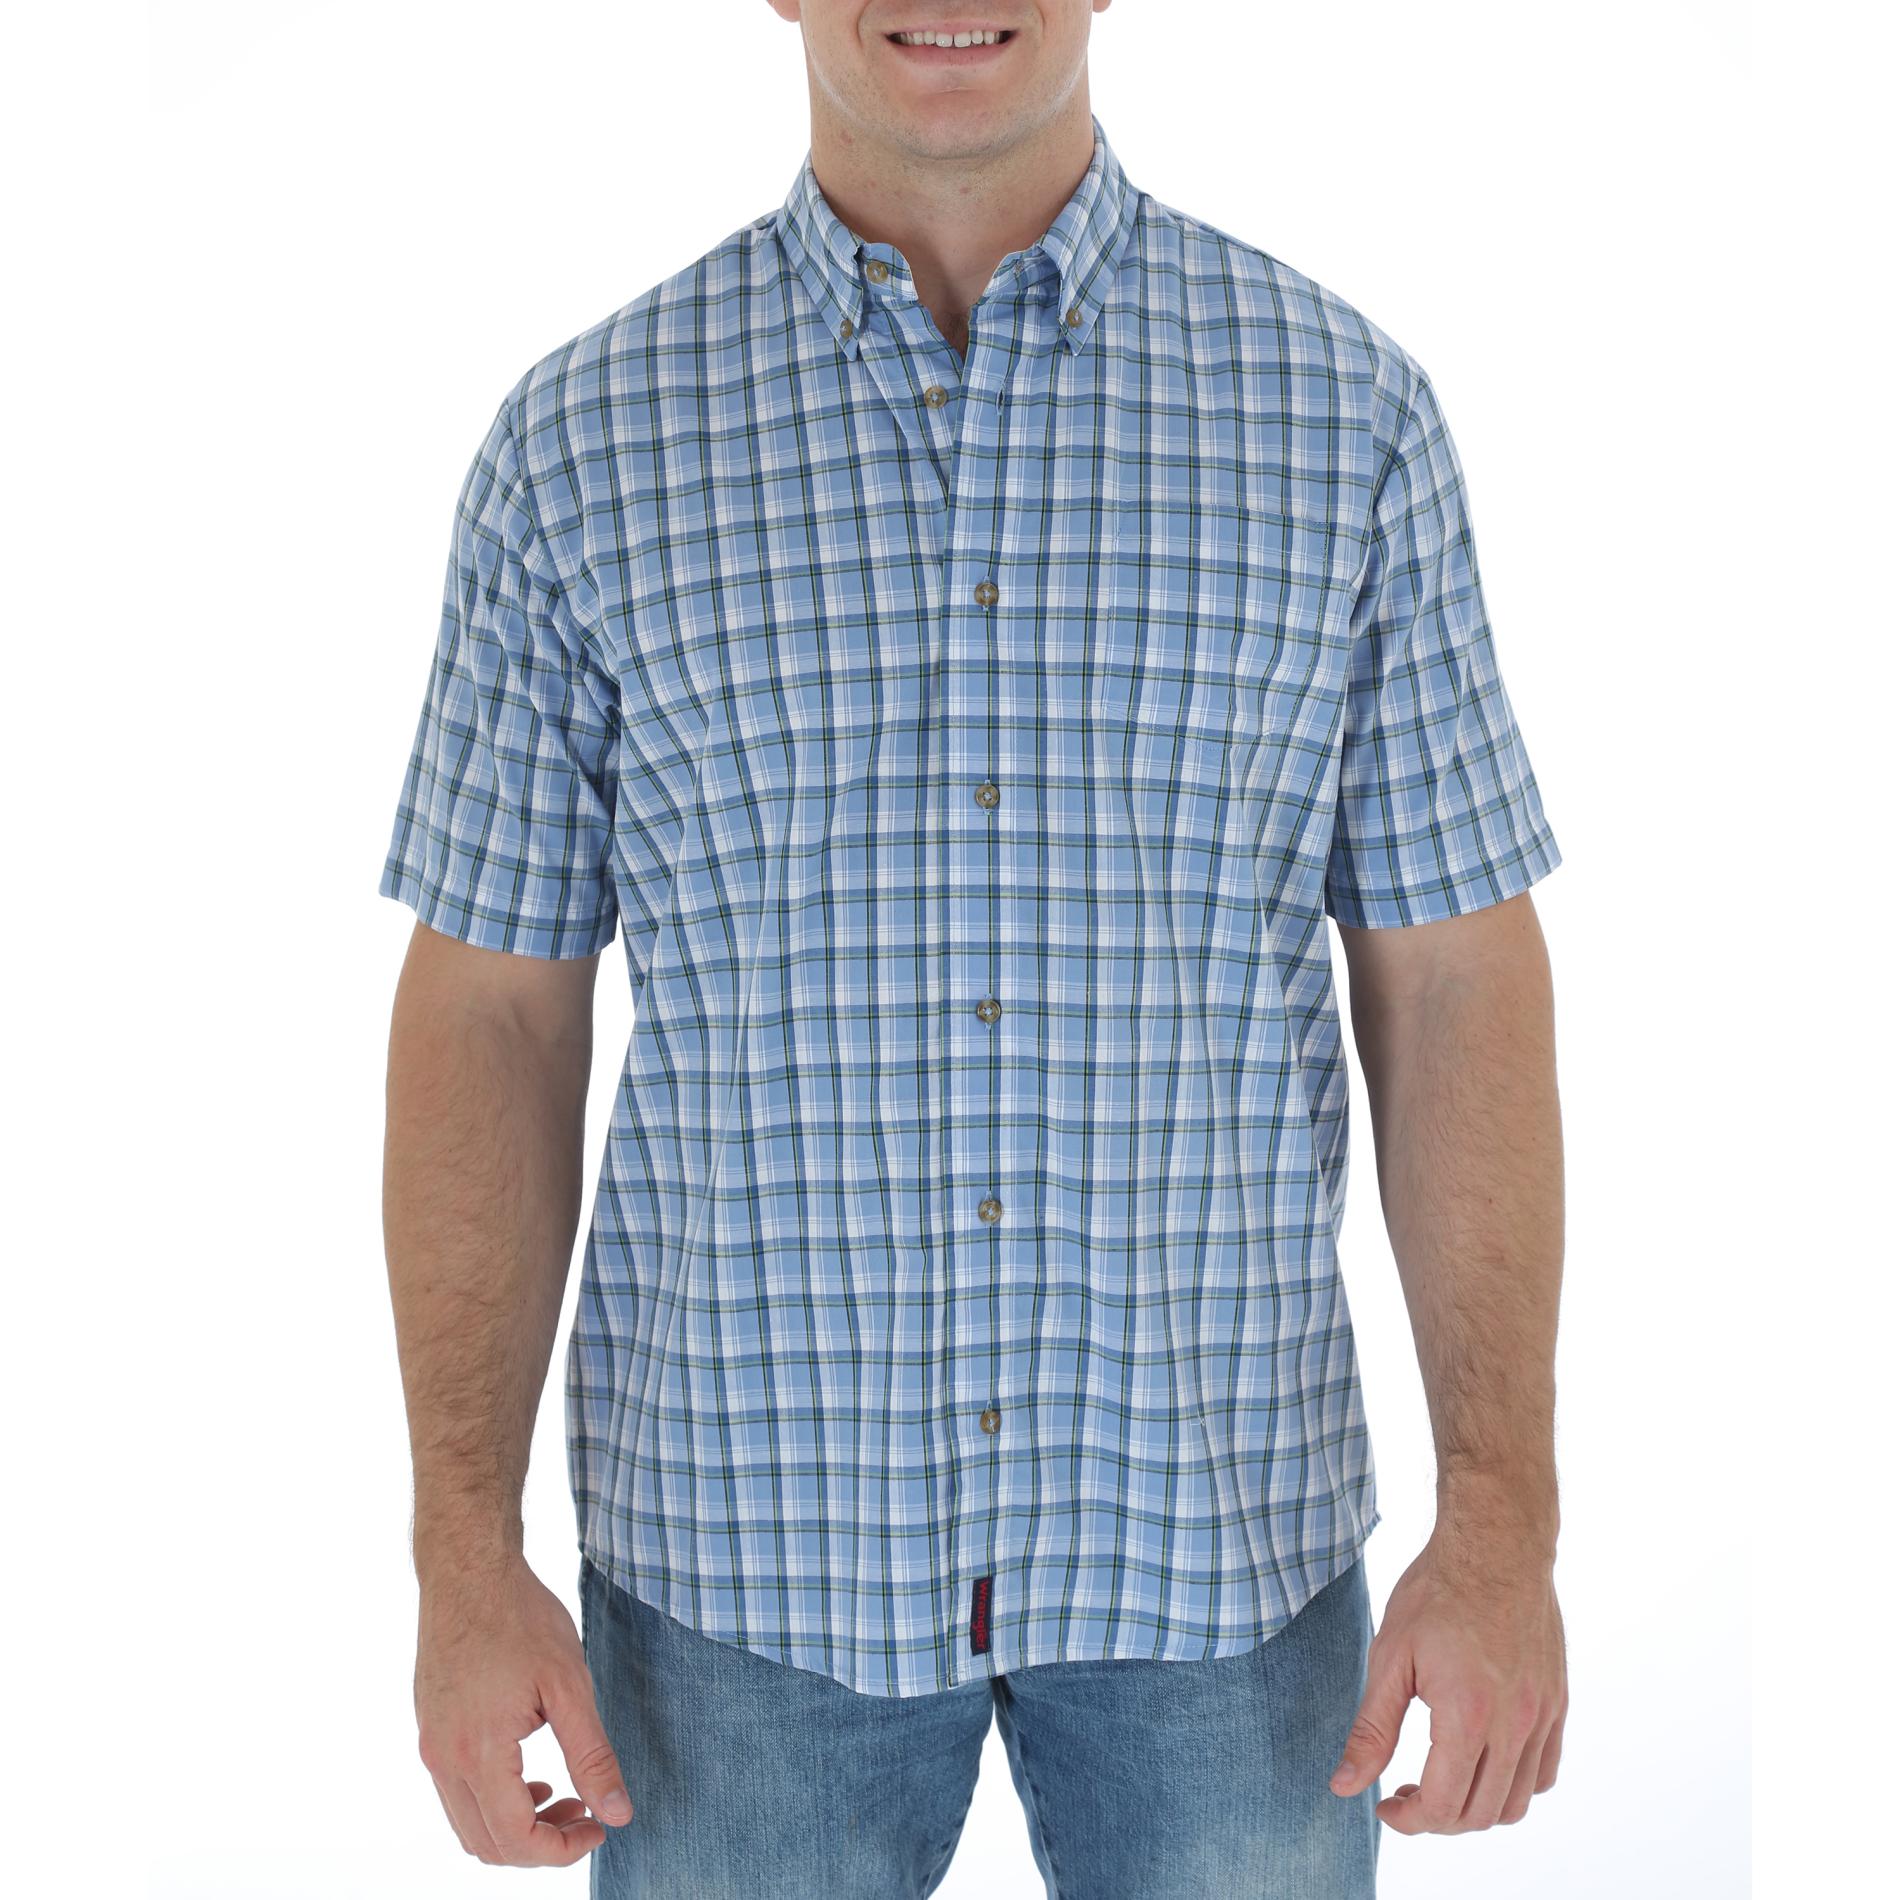 Wrangler Men's Short-Sleeve Button-Down Shirt - Plaid